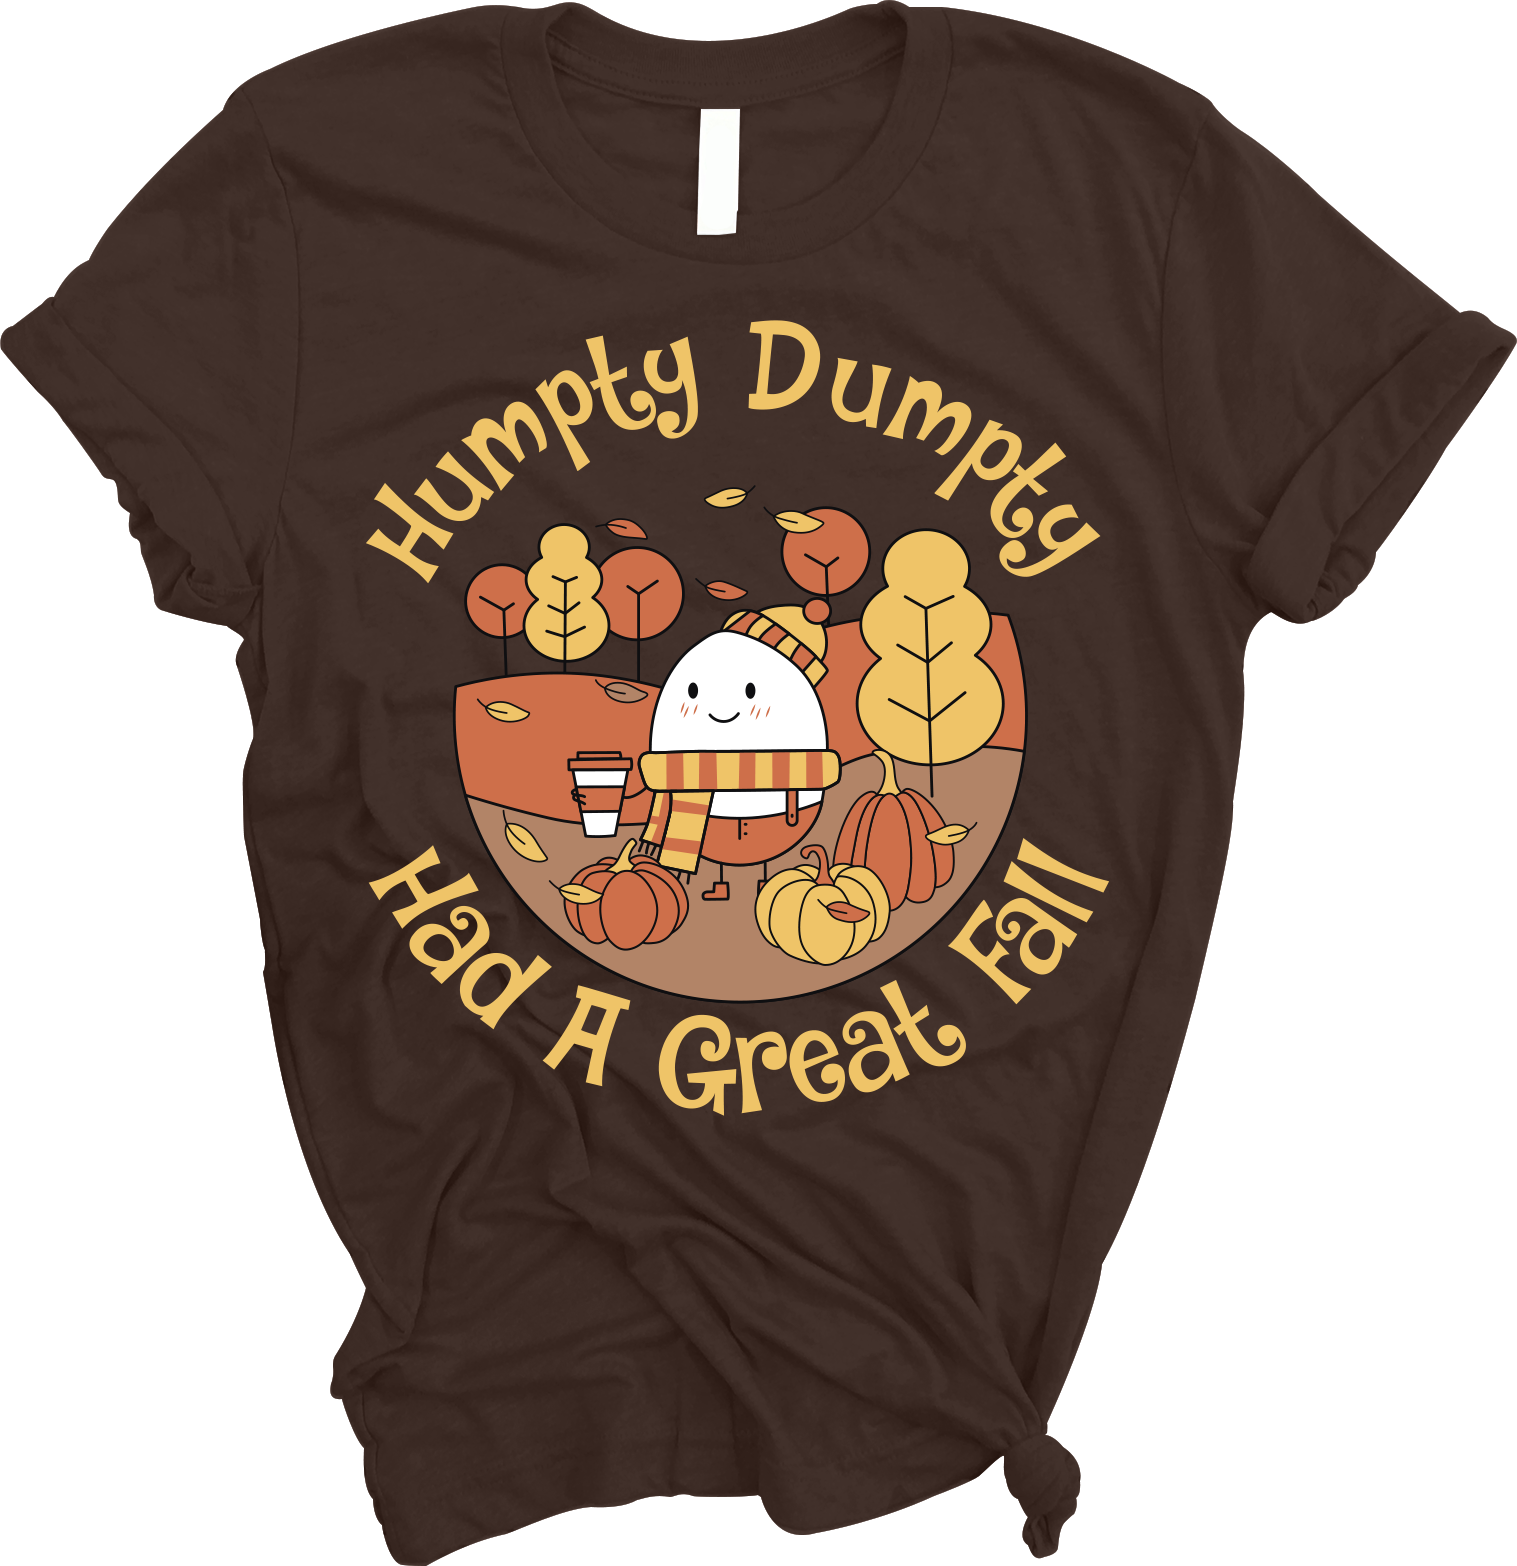 "Humpty Dumpty Had A Great Fall" Tee